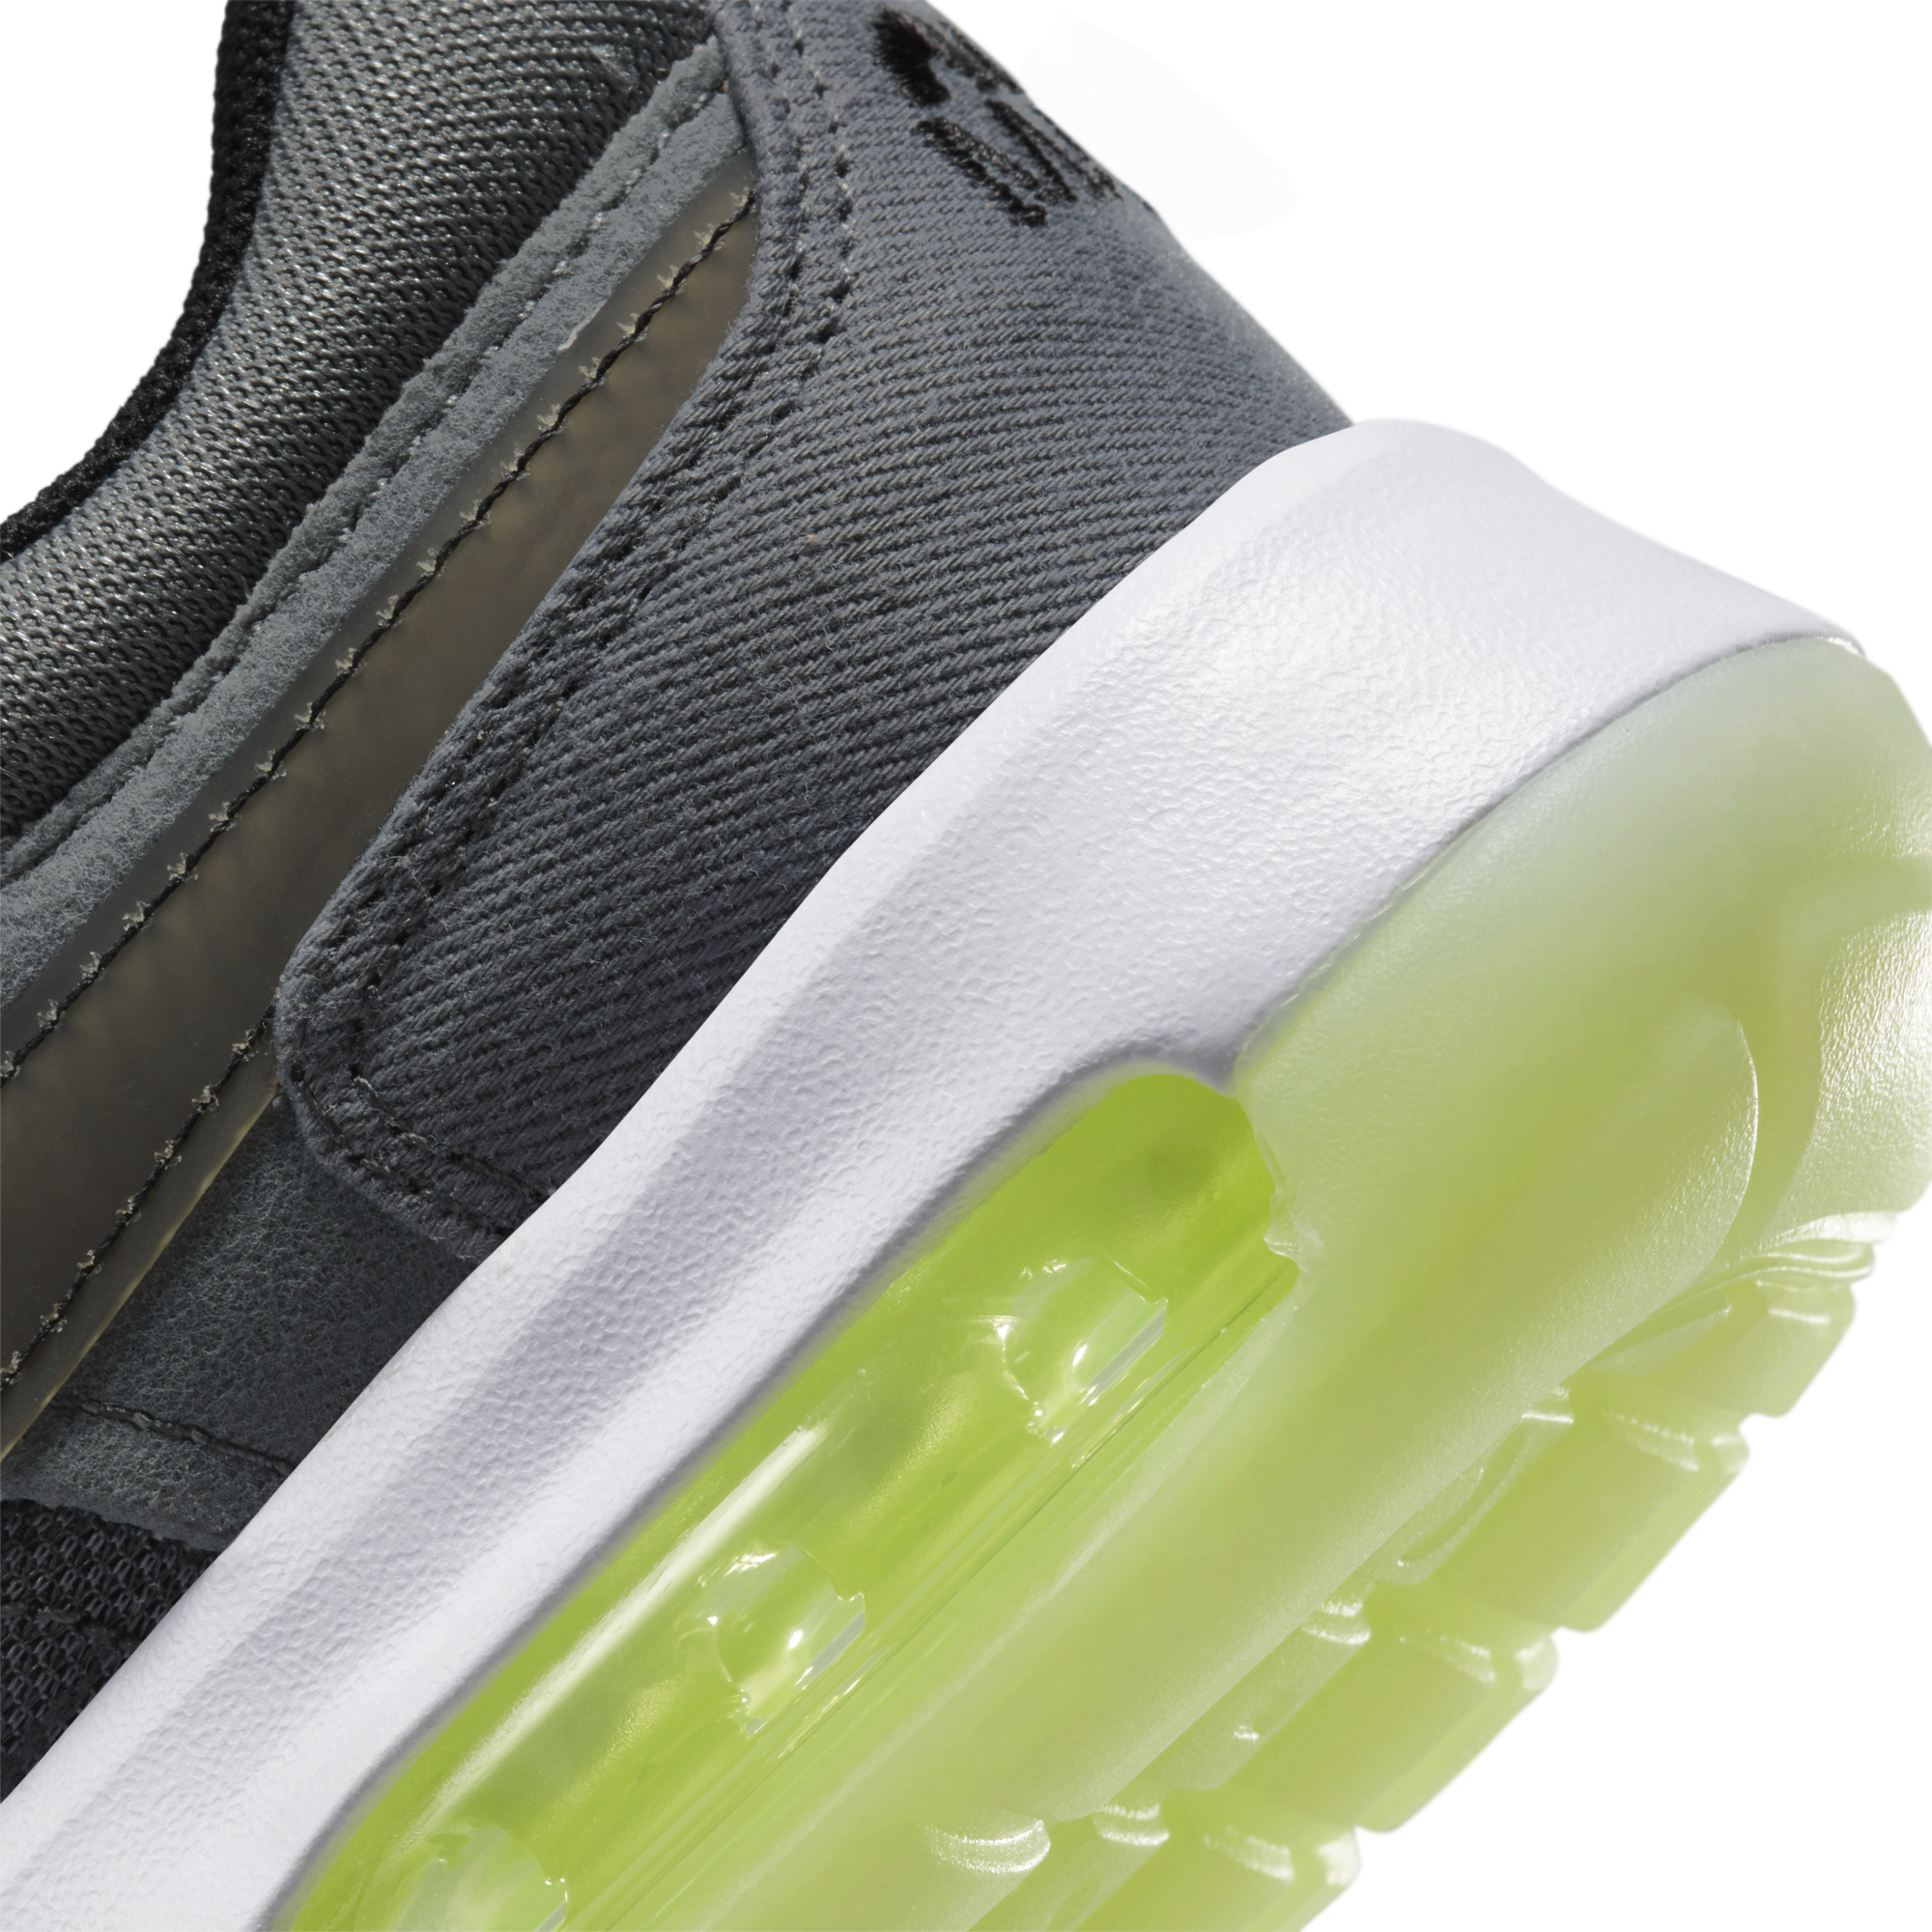 Nike Chaussures Air Max Motif (PS) CODE DH9389-005, Enfant fille, 28 EU :  : Mode